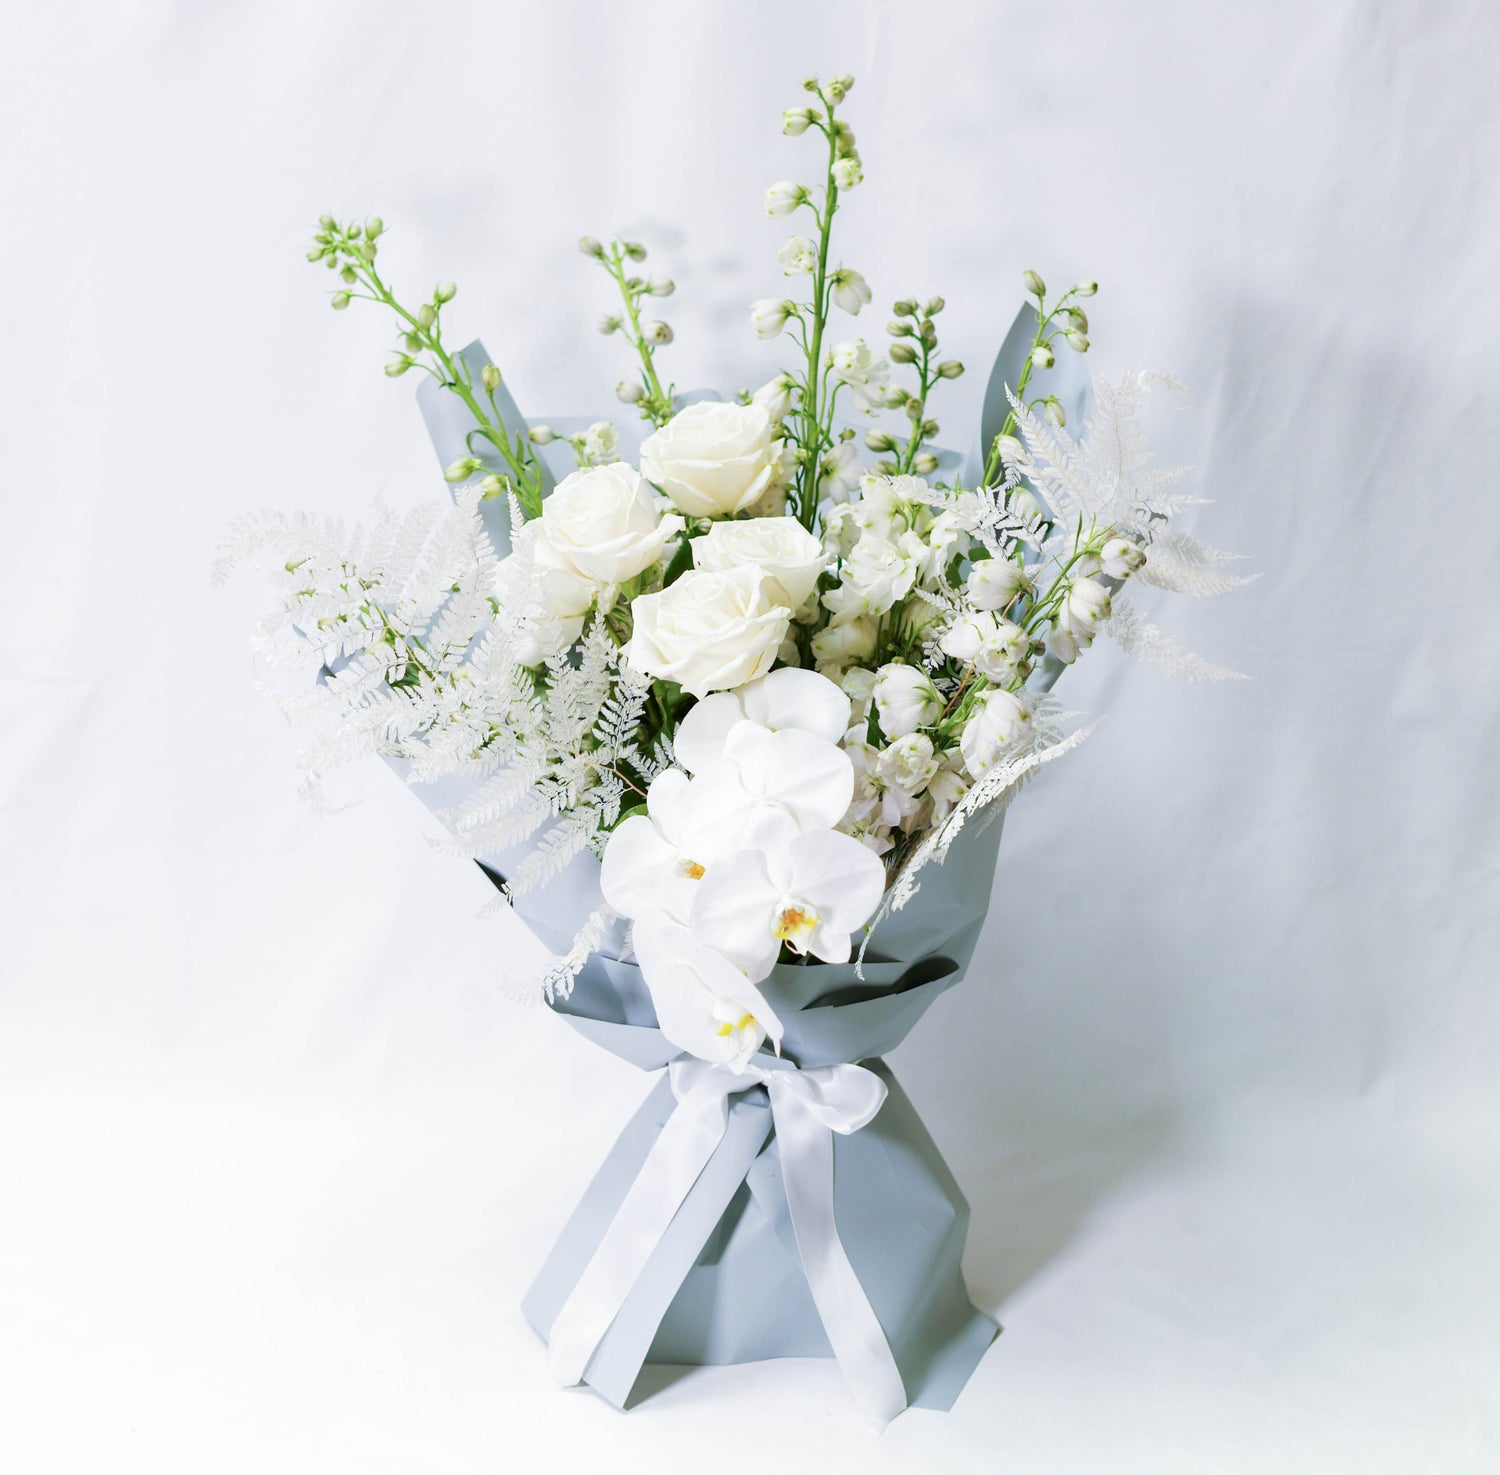 seasoanl white and green tones flowers